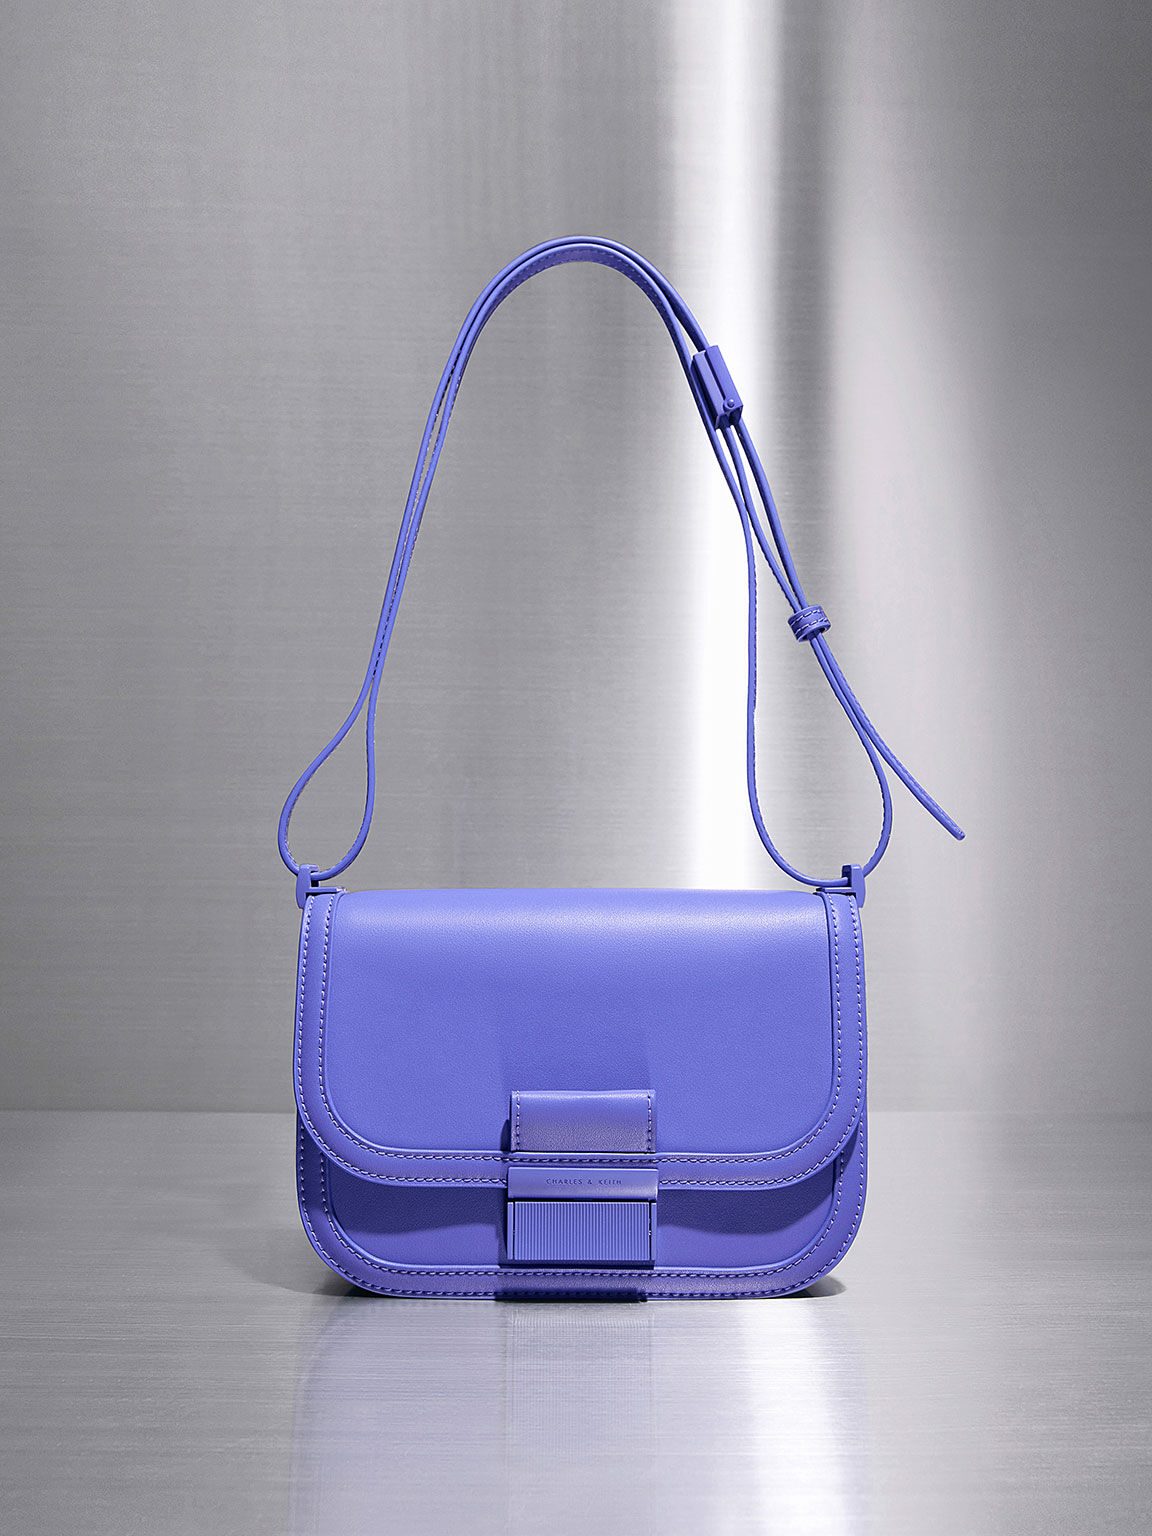 Charles & Keith - Women's Charlot Bag, Purple, S